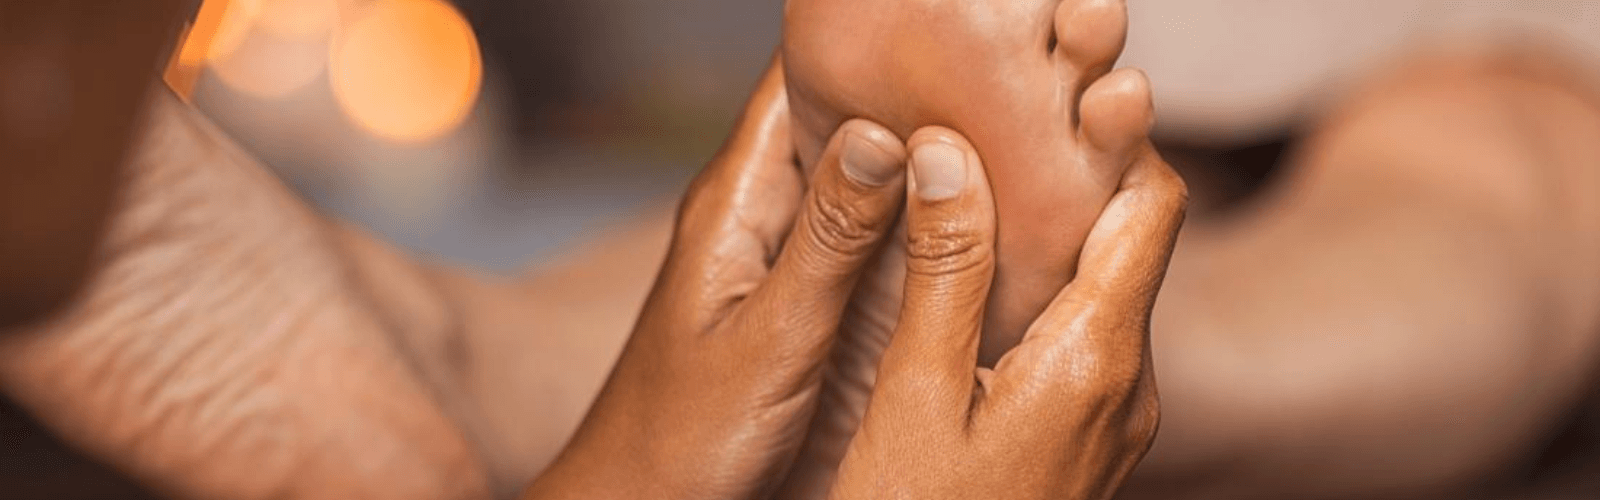 reflexology massage in ibiza